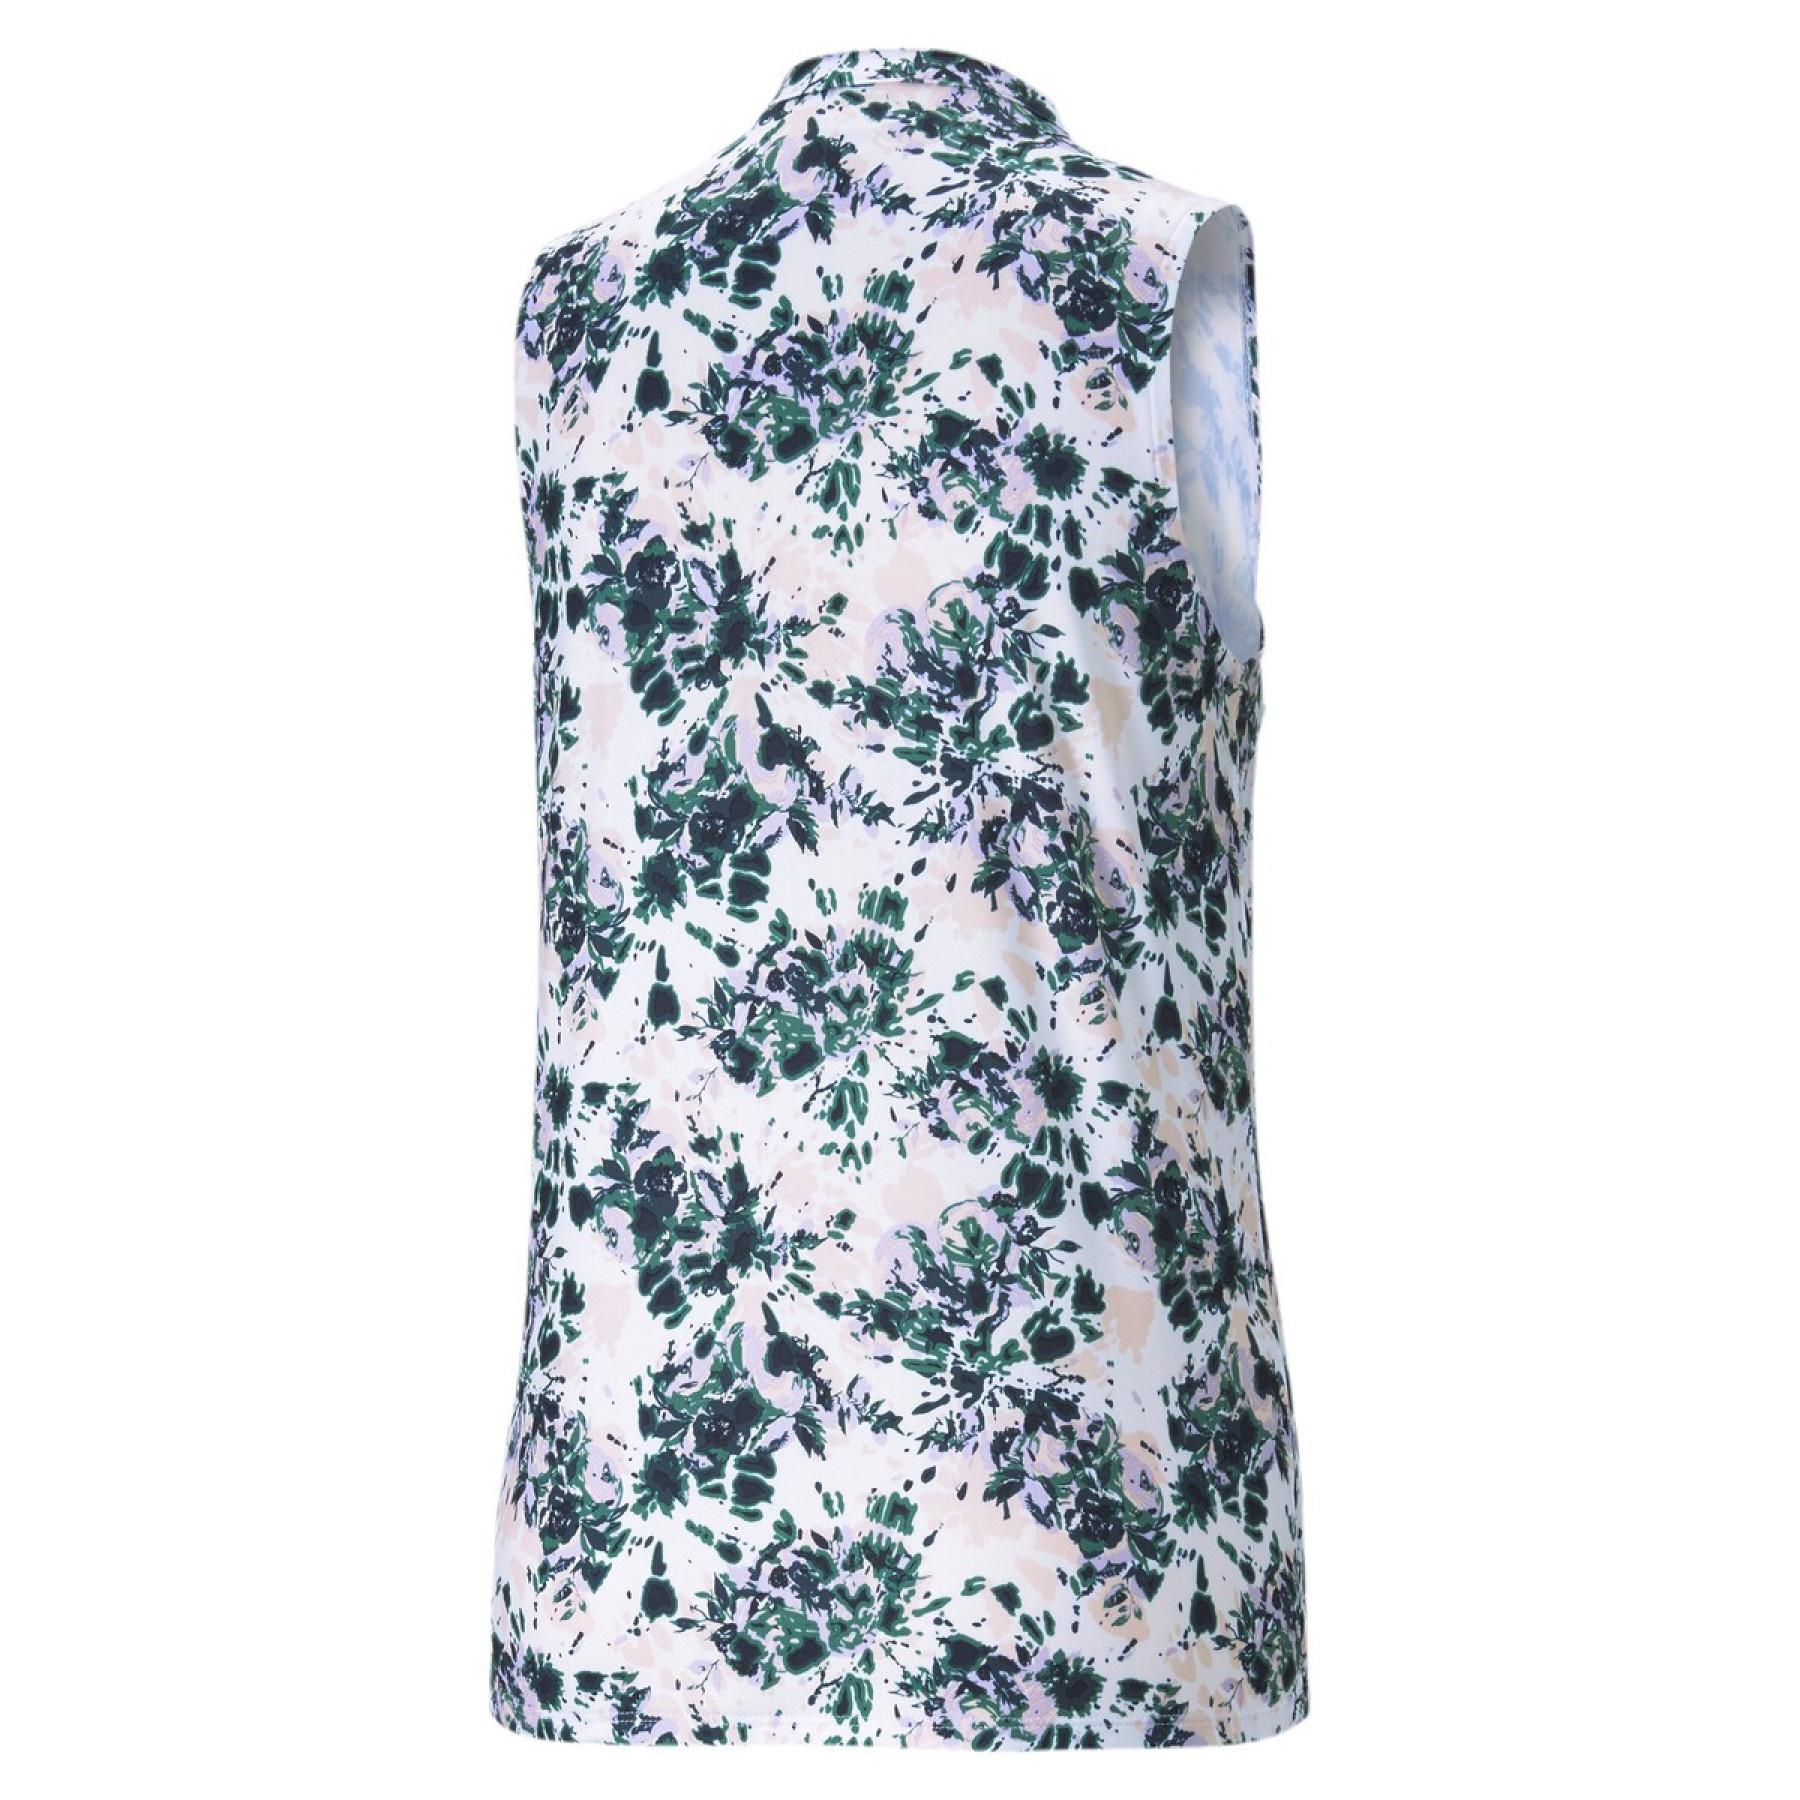 Camisa pólo feminina Puma Cloudspun Floral Tie Dye SL